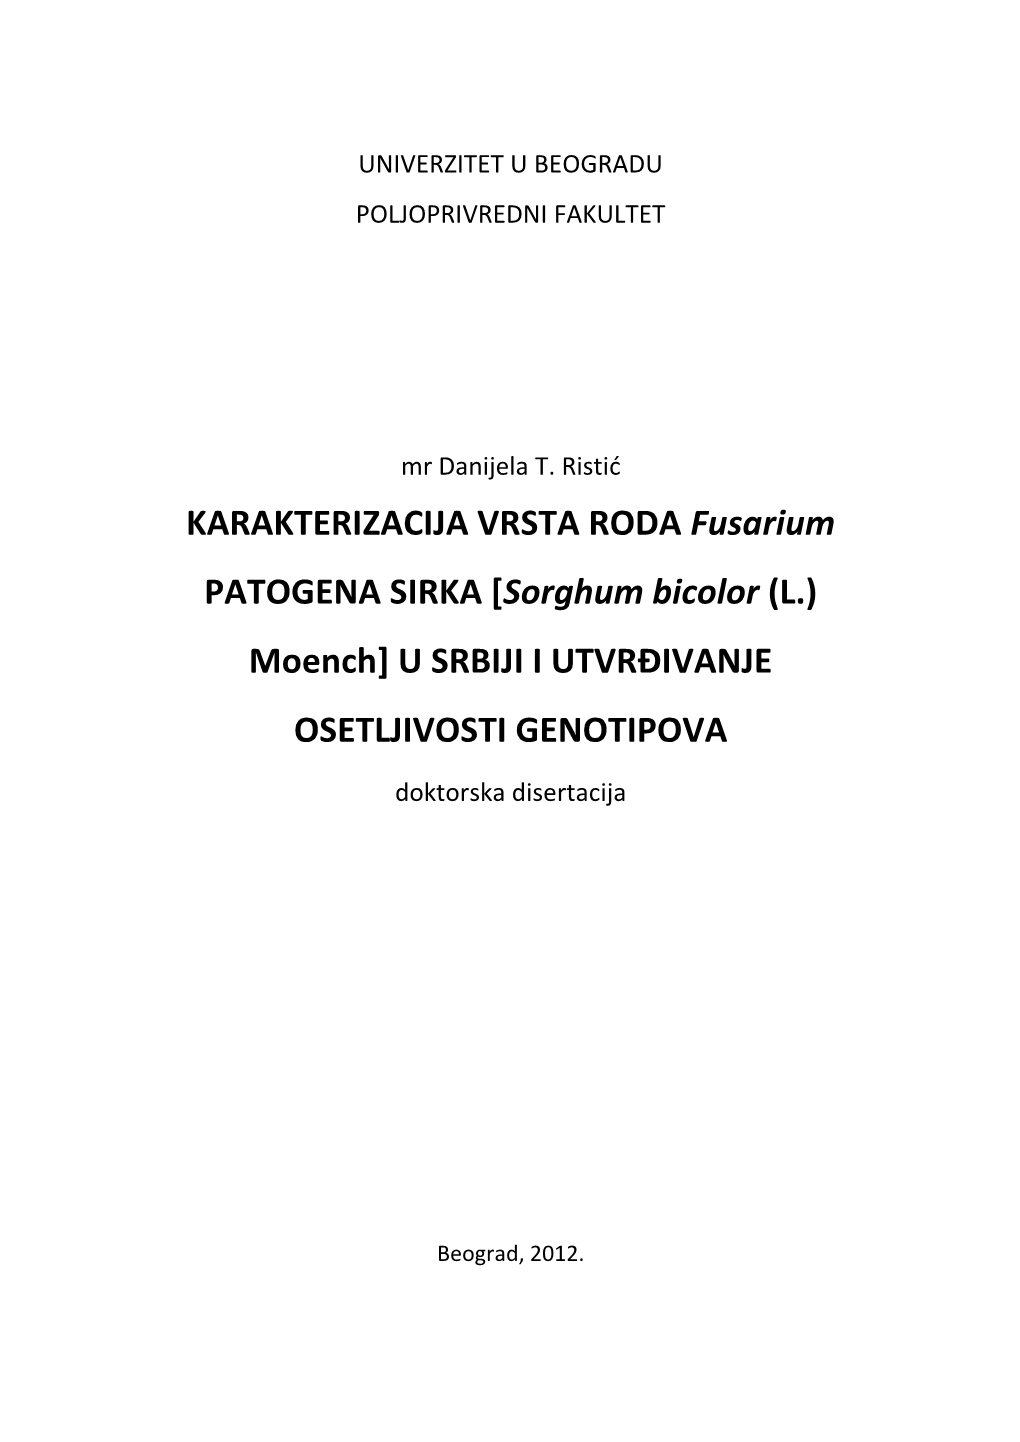 KARAKTERIZACIJA VRSTA RODA Fusarium PATOGENA SIRKA [Sorghum Bicolor (L.) Moench] U SRBIJI I UTVRĐIVANJE OSETLJIVOSTI GENOTIPOVA